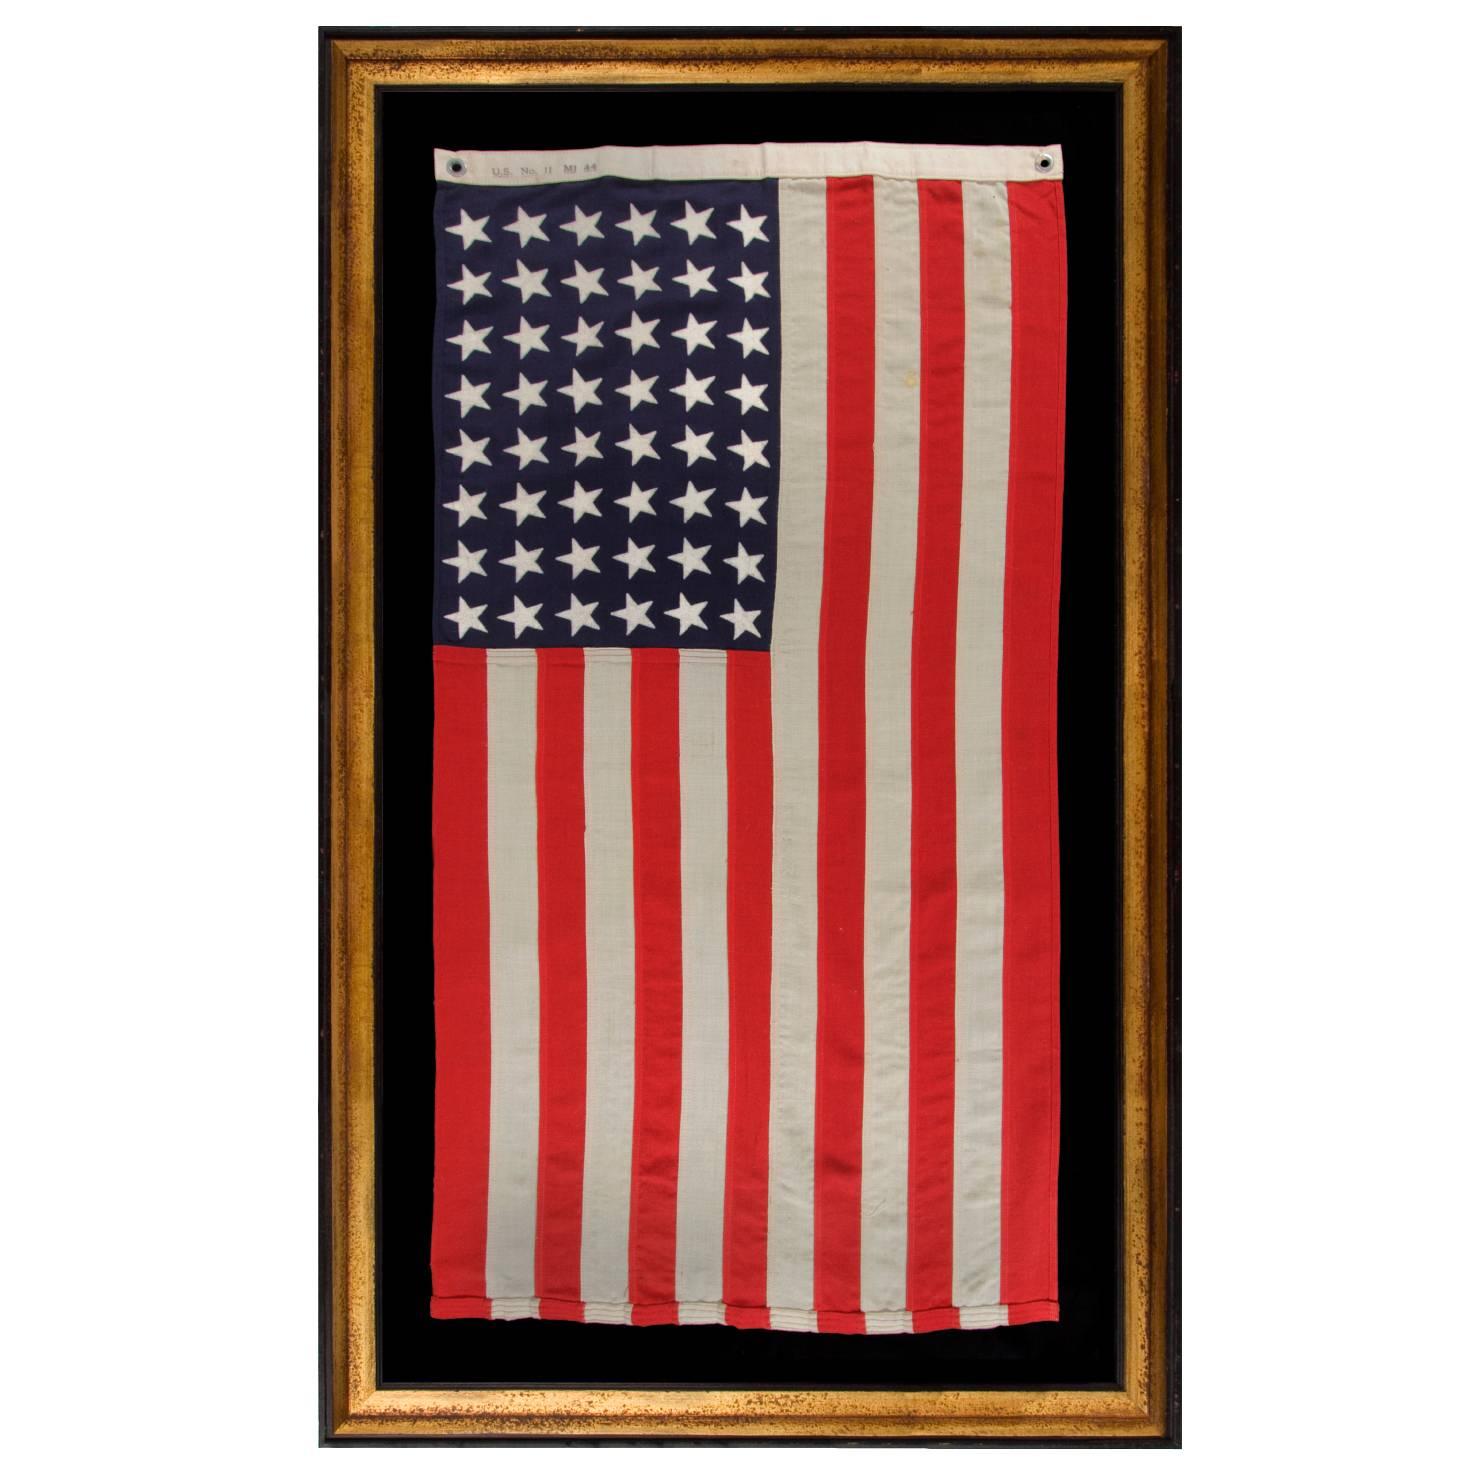 48 Star, U.S Navy Small Boat Ensign Flag, Made At Mare Island California